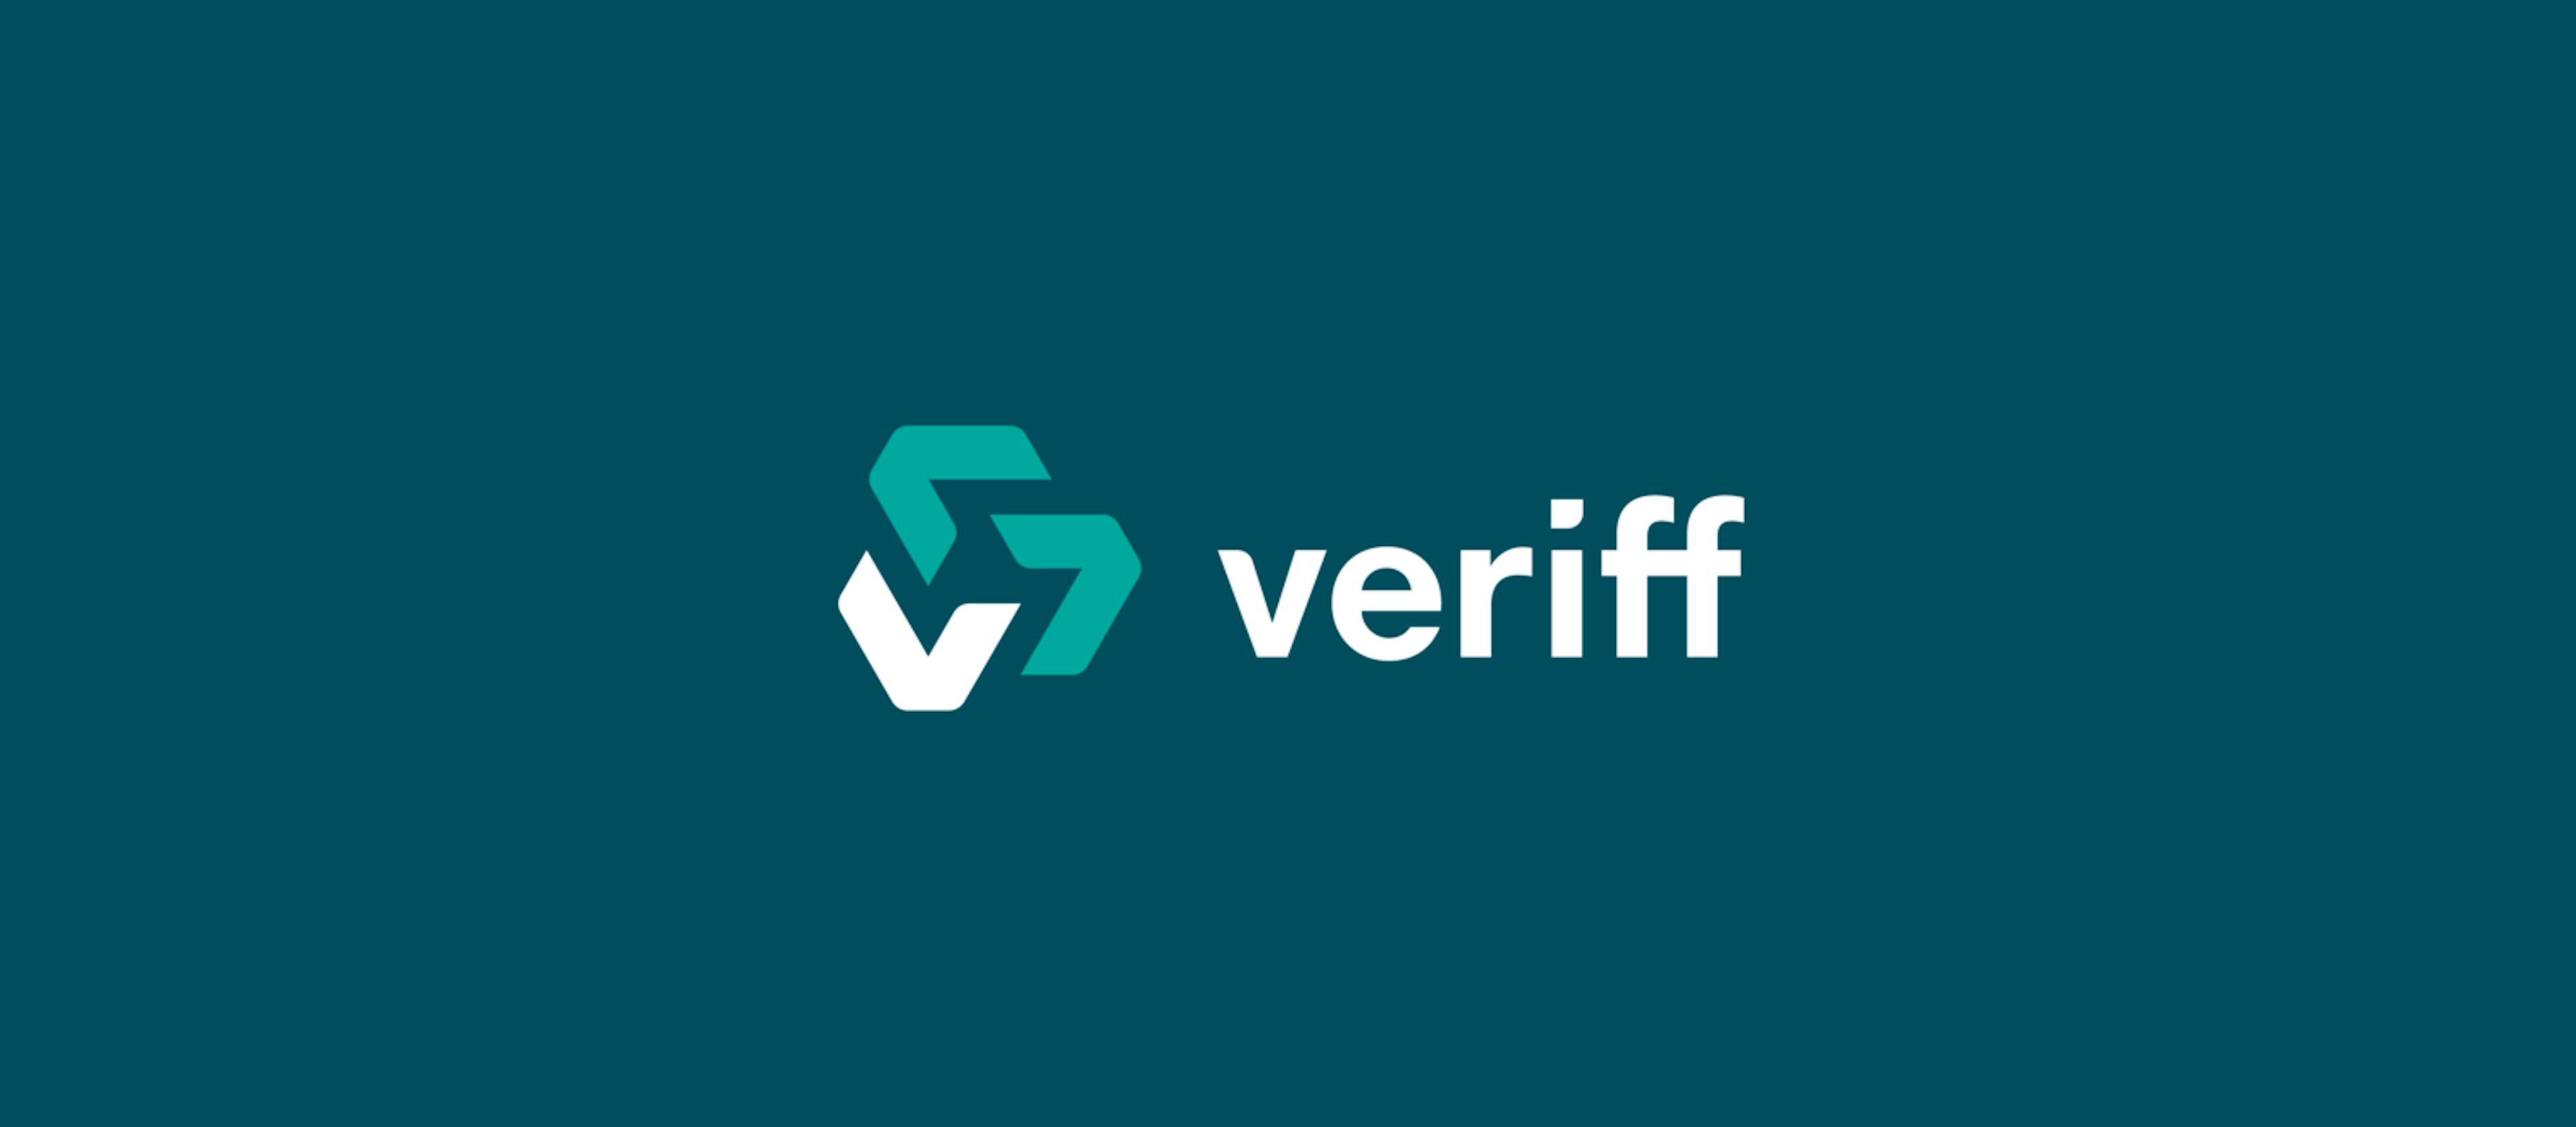 Veriff’s New Visual Brand Identity